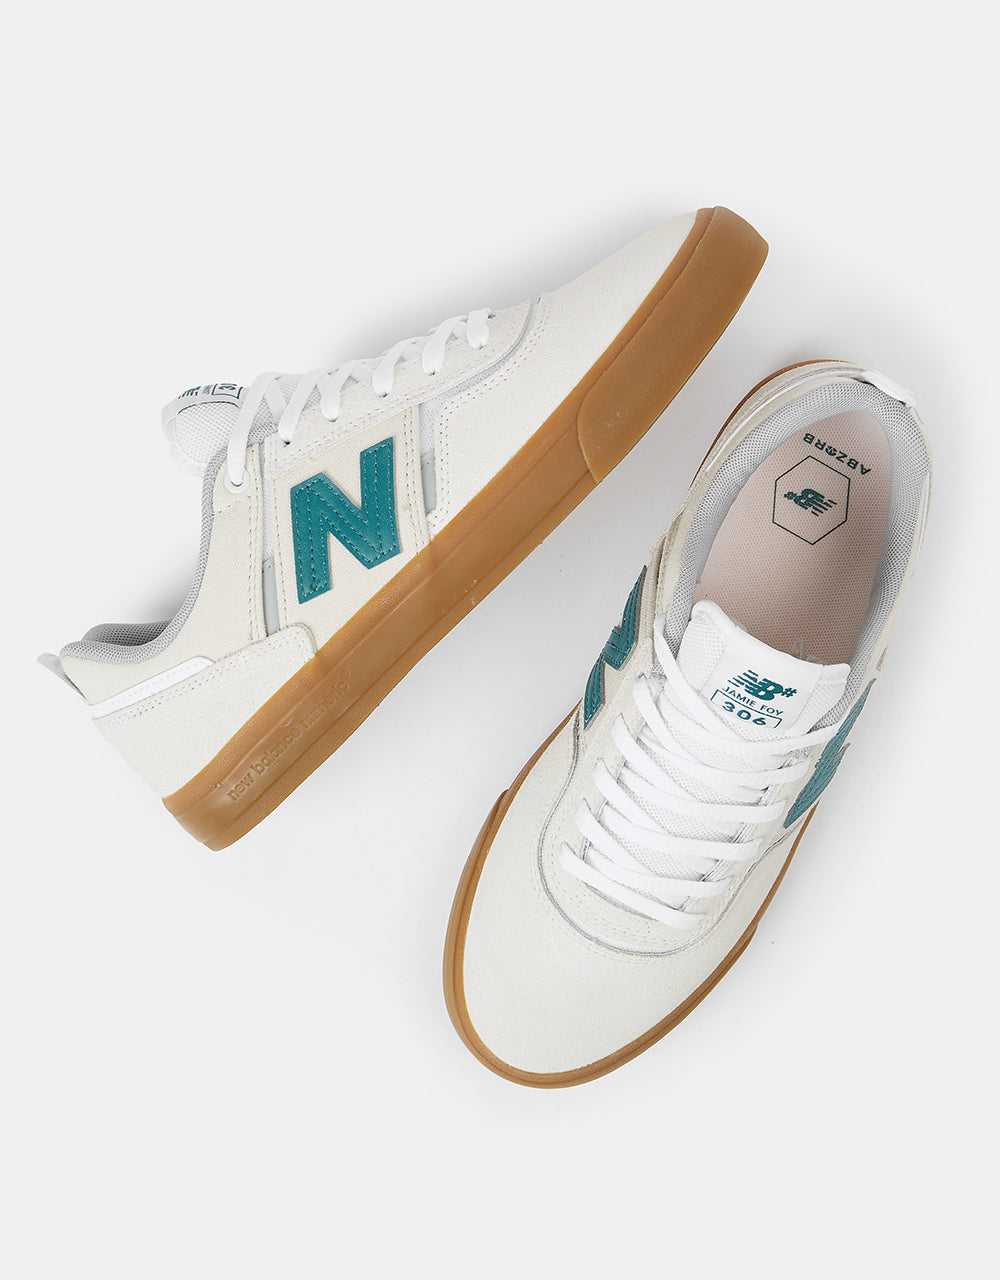 New Balance Numeric 306 Skate Shoes - Sea Salt/Teal